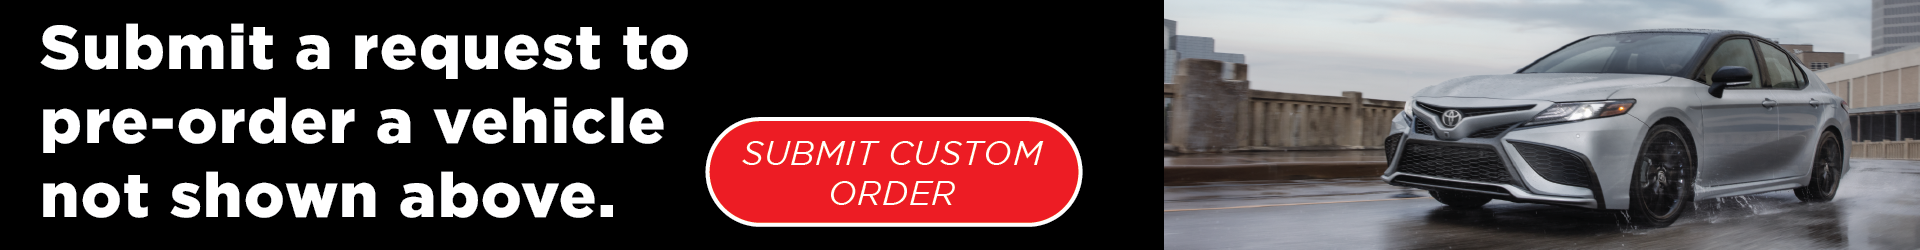 Start a custom order | Priority Toyota Chesapeake in Chesapeake VA